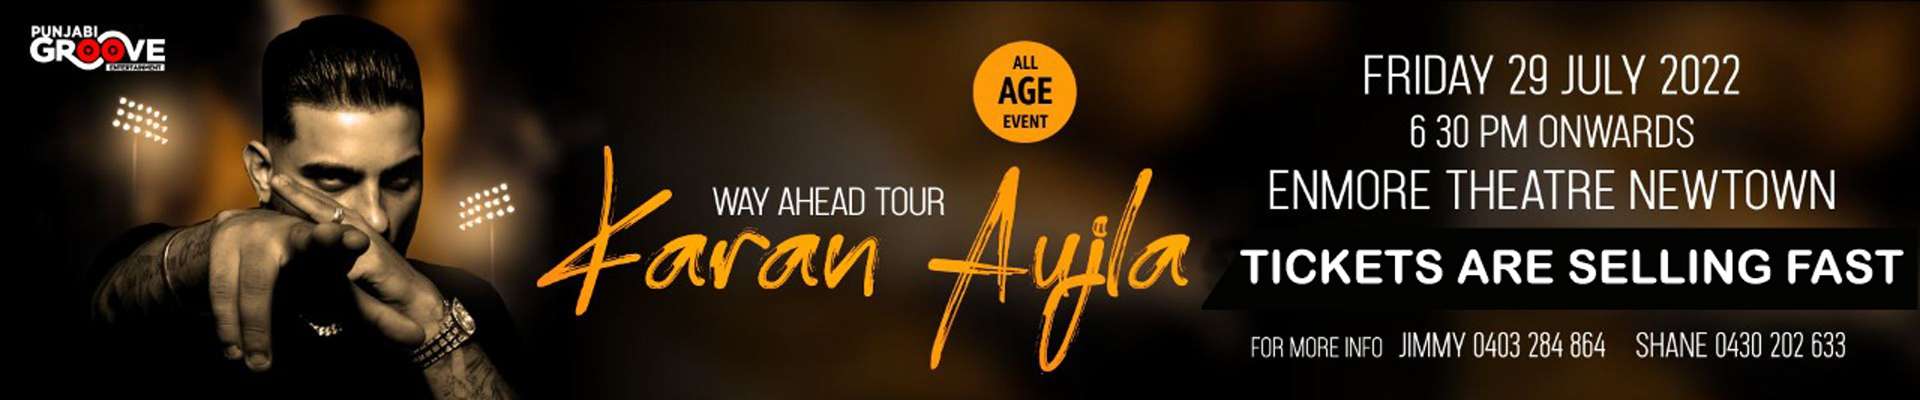 Way Ahead Tour - Karan Aujla Live in Concert Sydney 2022